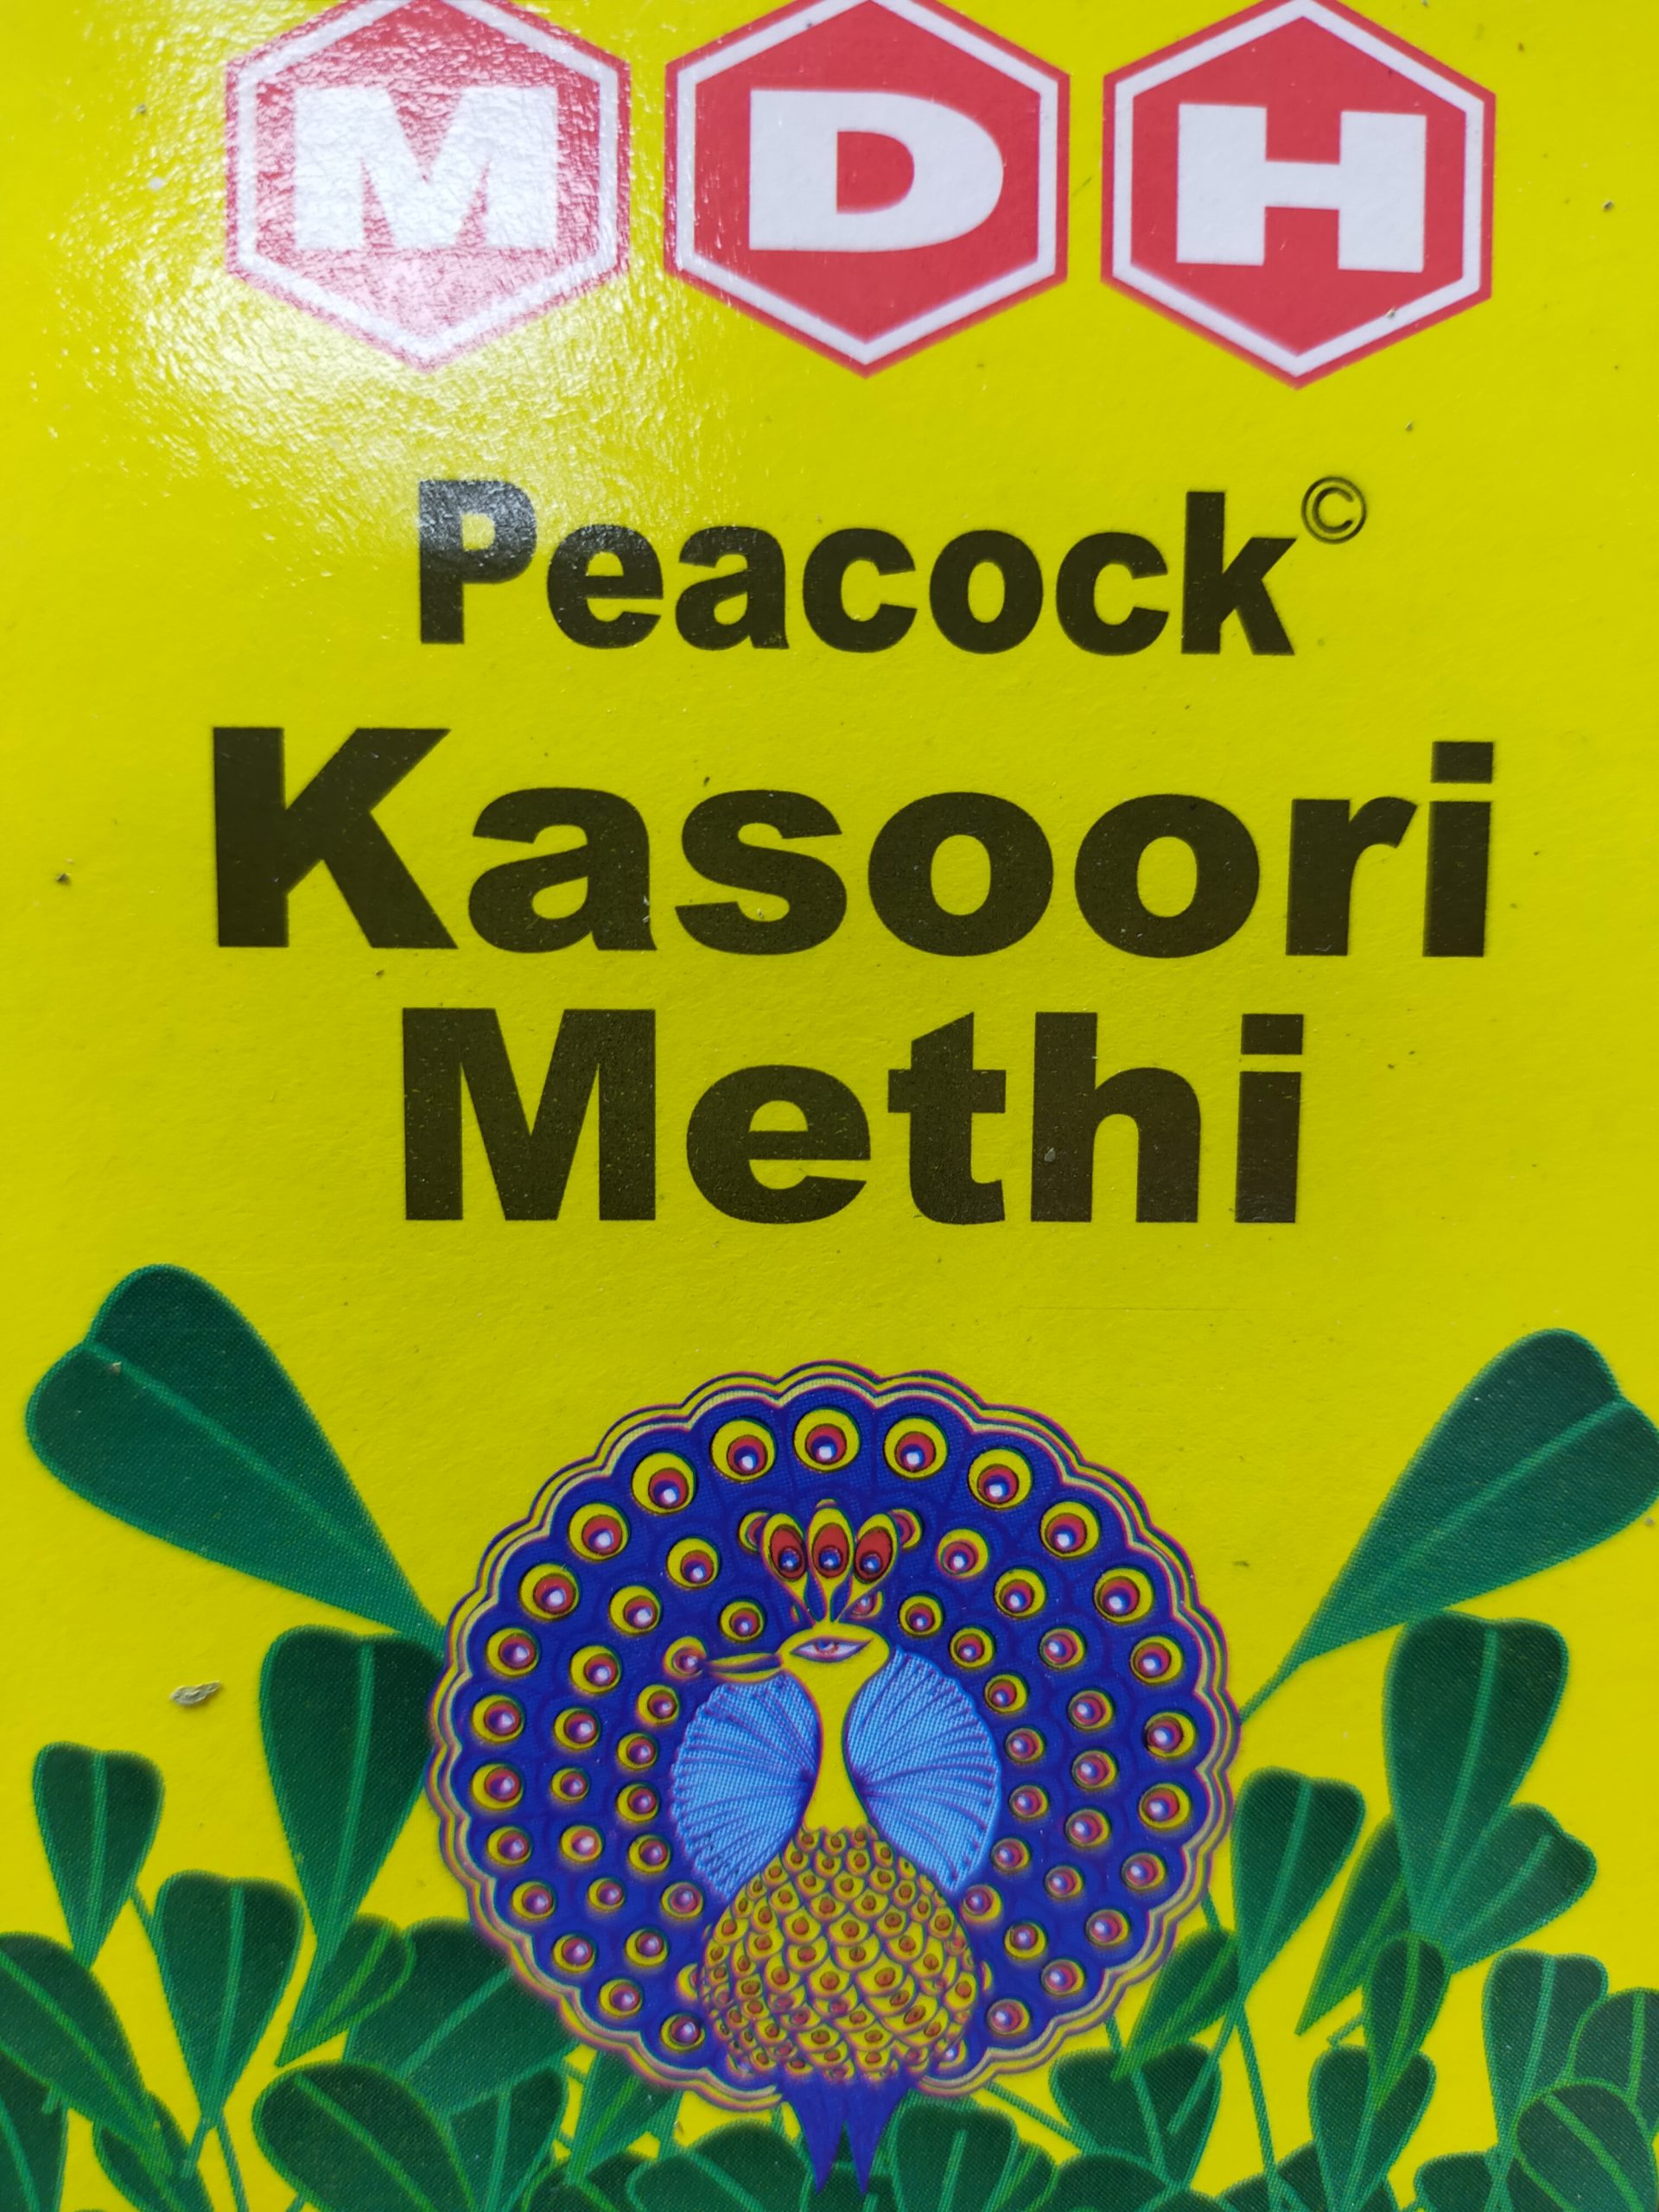 MDH Peacock Kasoori Methi 25g